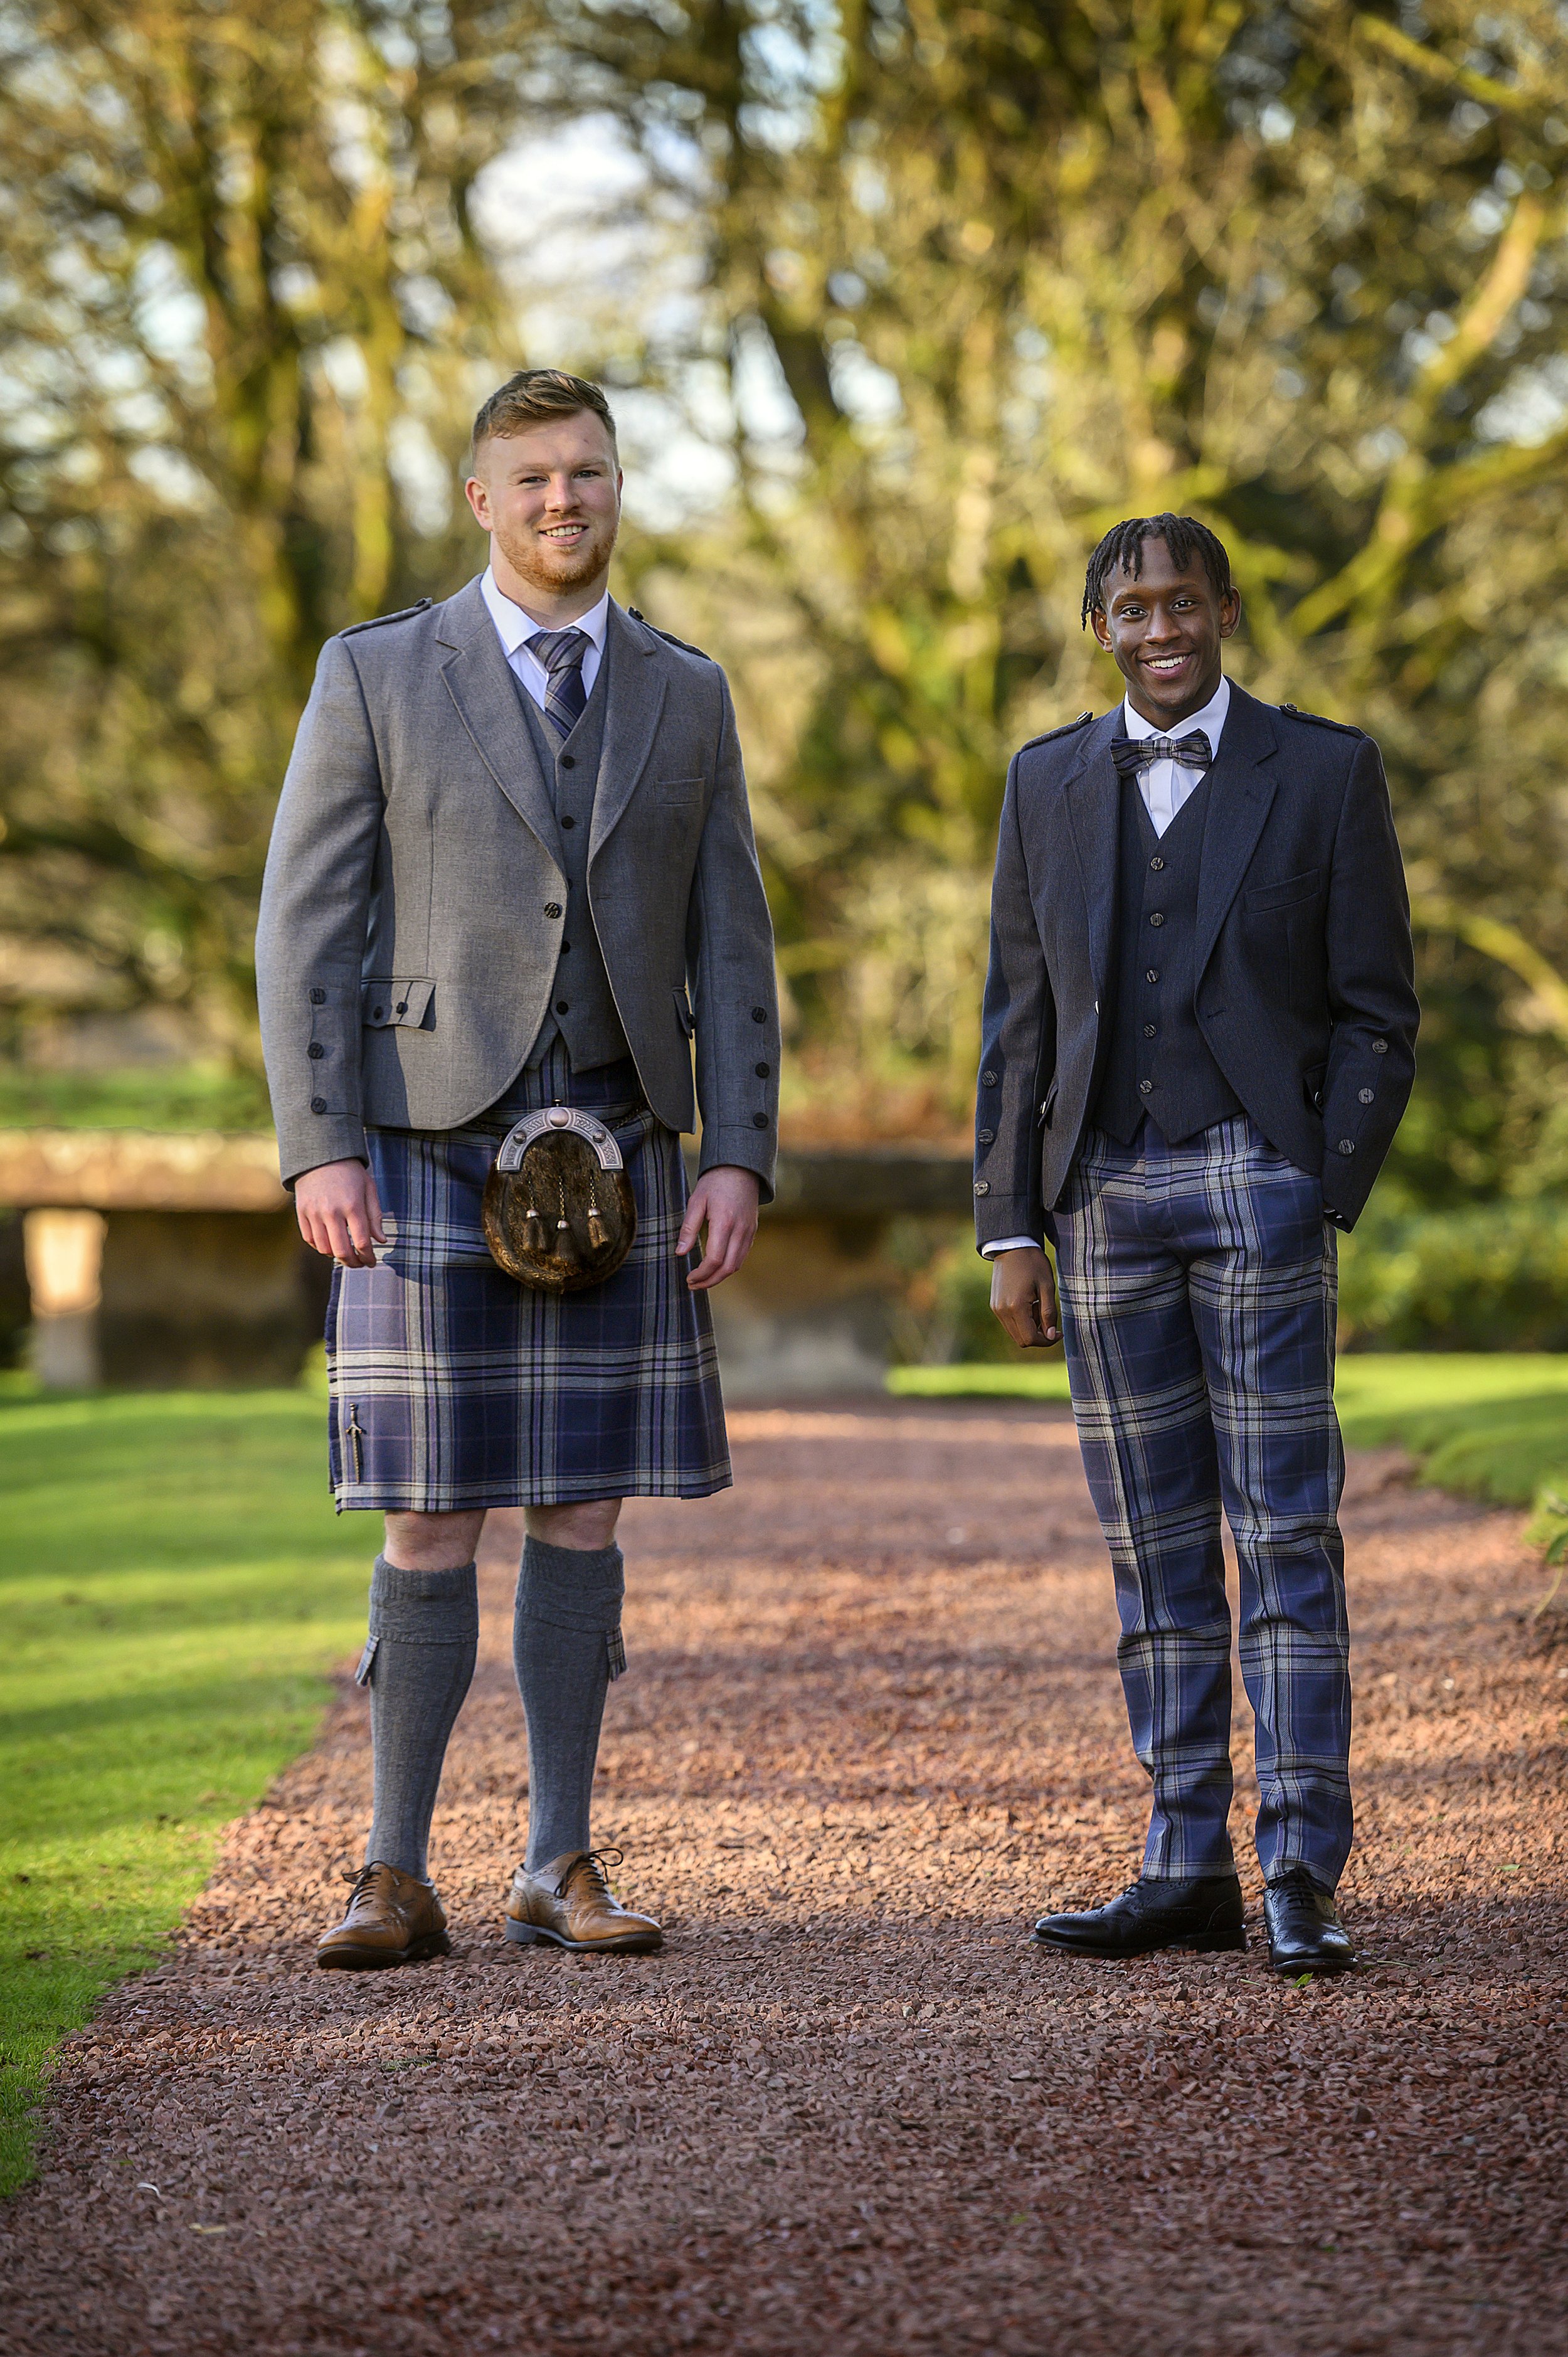 Scottish Trews Our Guide to Highland Attire  Heritage Fashion